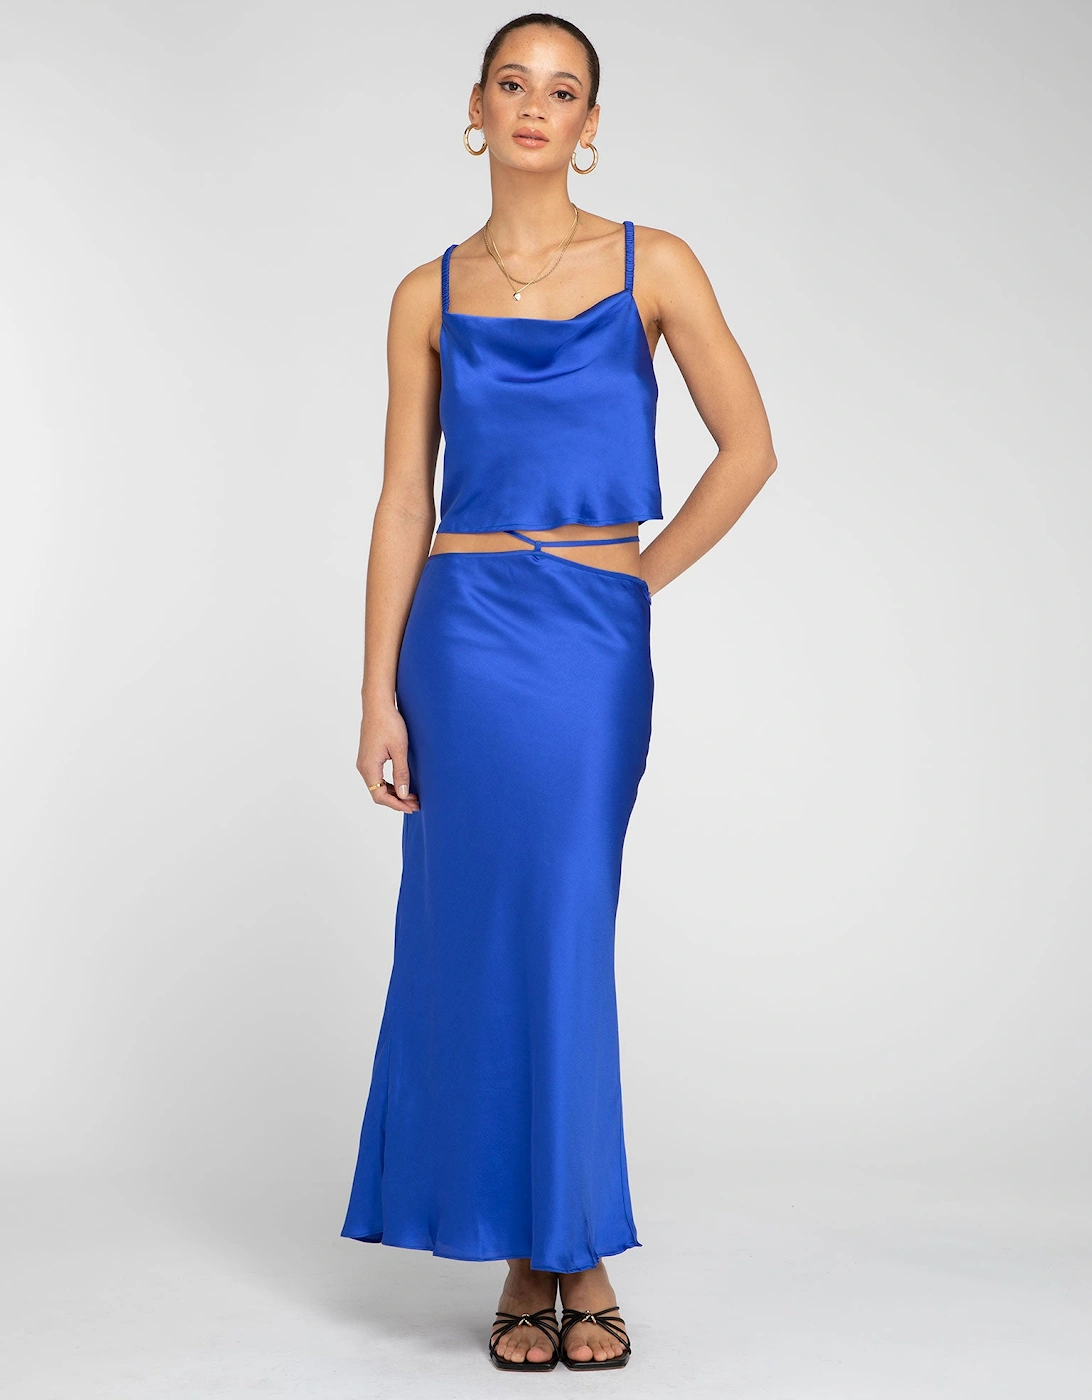 Omnes Women's Riviera Tie Skirt in Blue - Size: 16